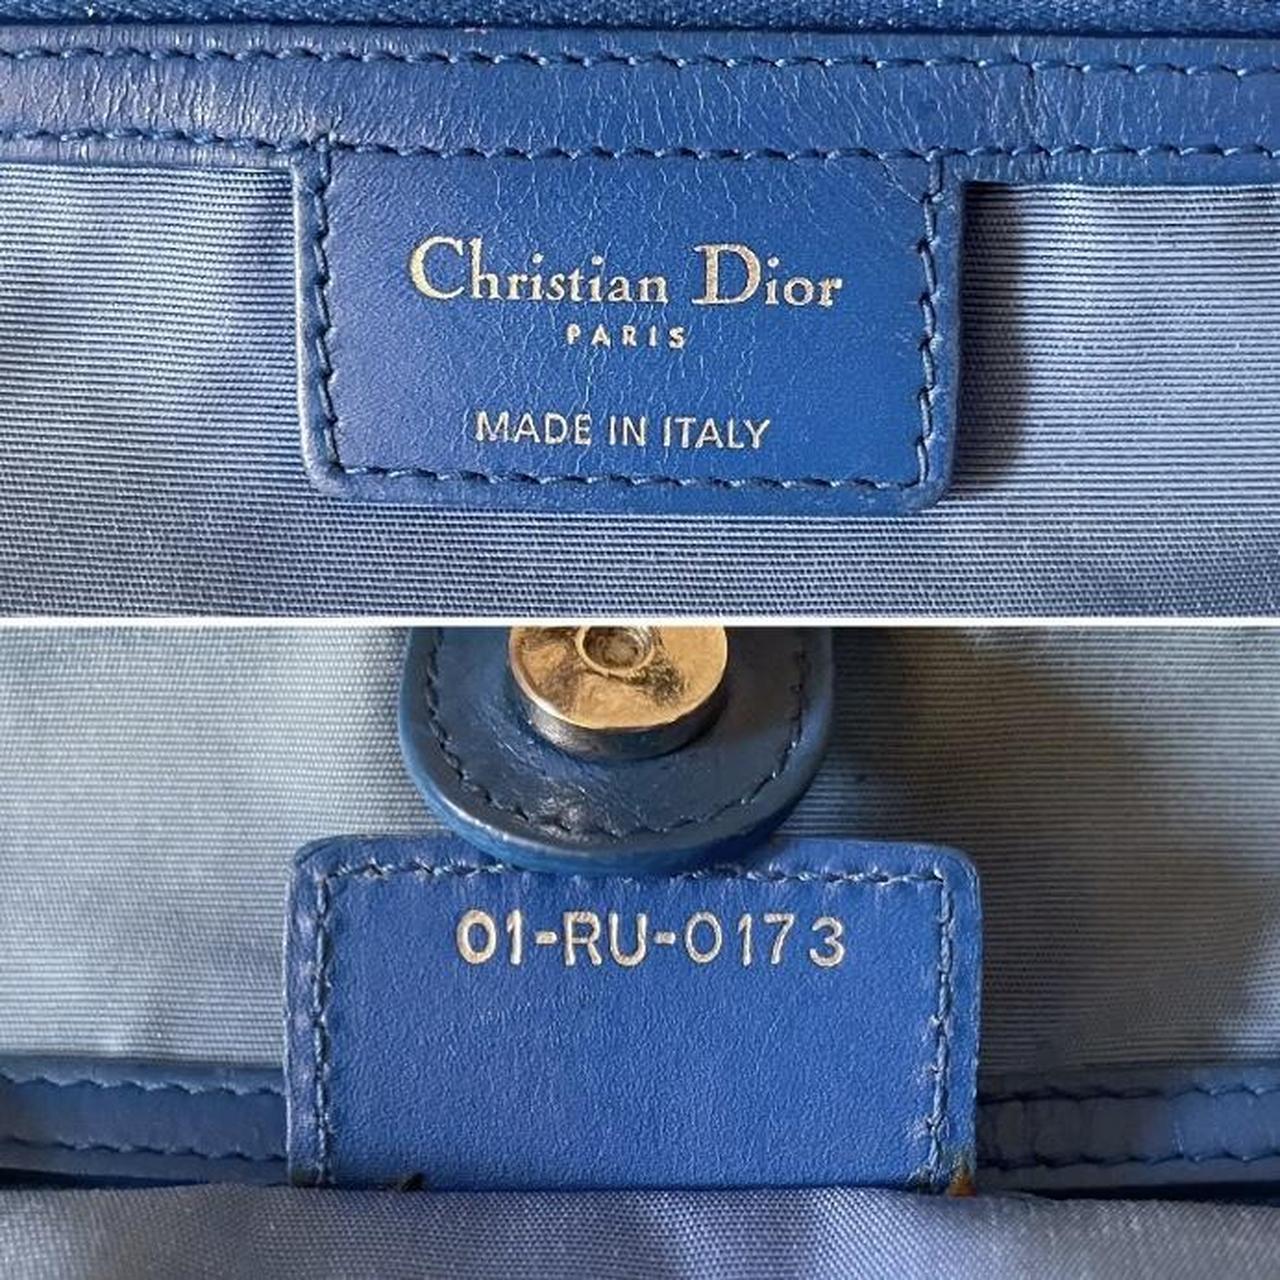 Dior Blue Cannage Panarea Lambskin Leather Tote Bag